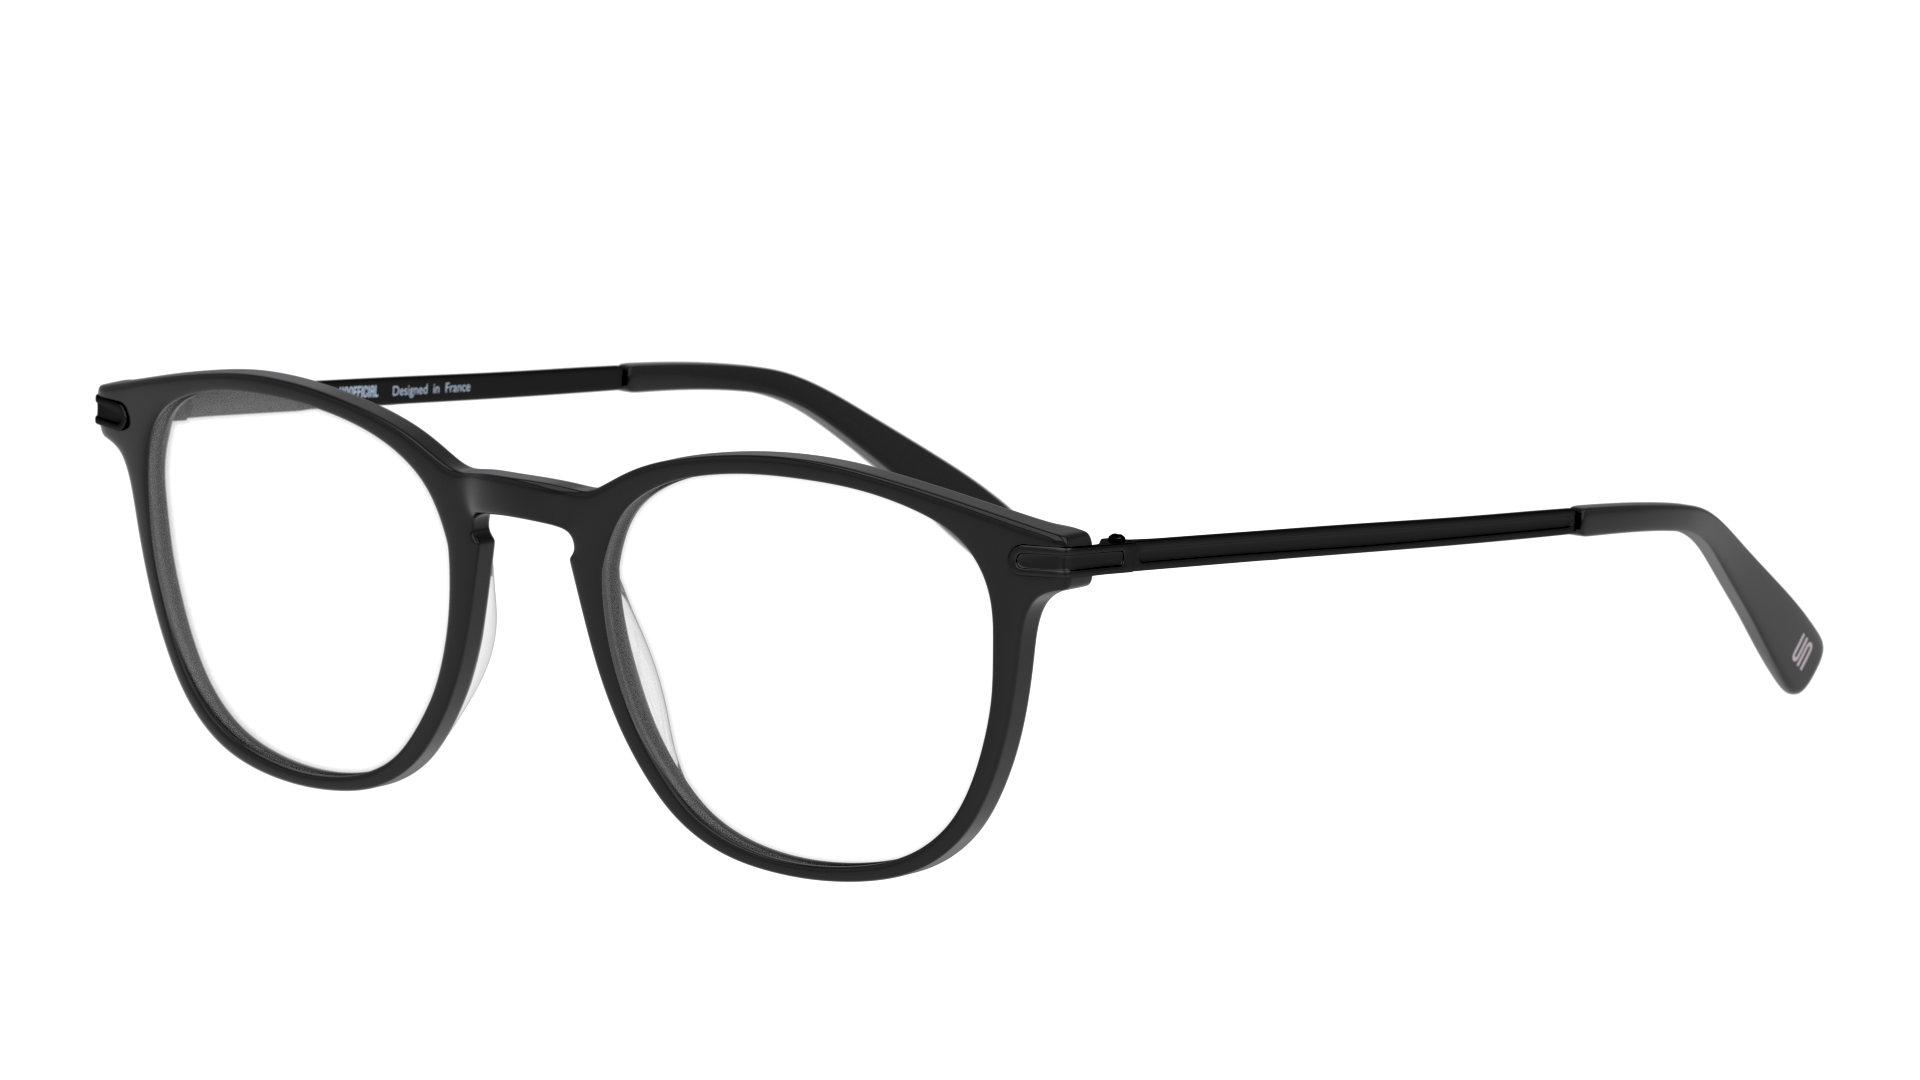 Angle_Left01 Unofficial UNOM0161 Glasses Transparent / Black